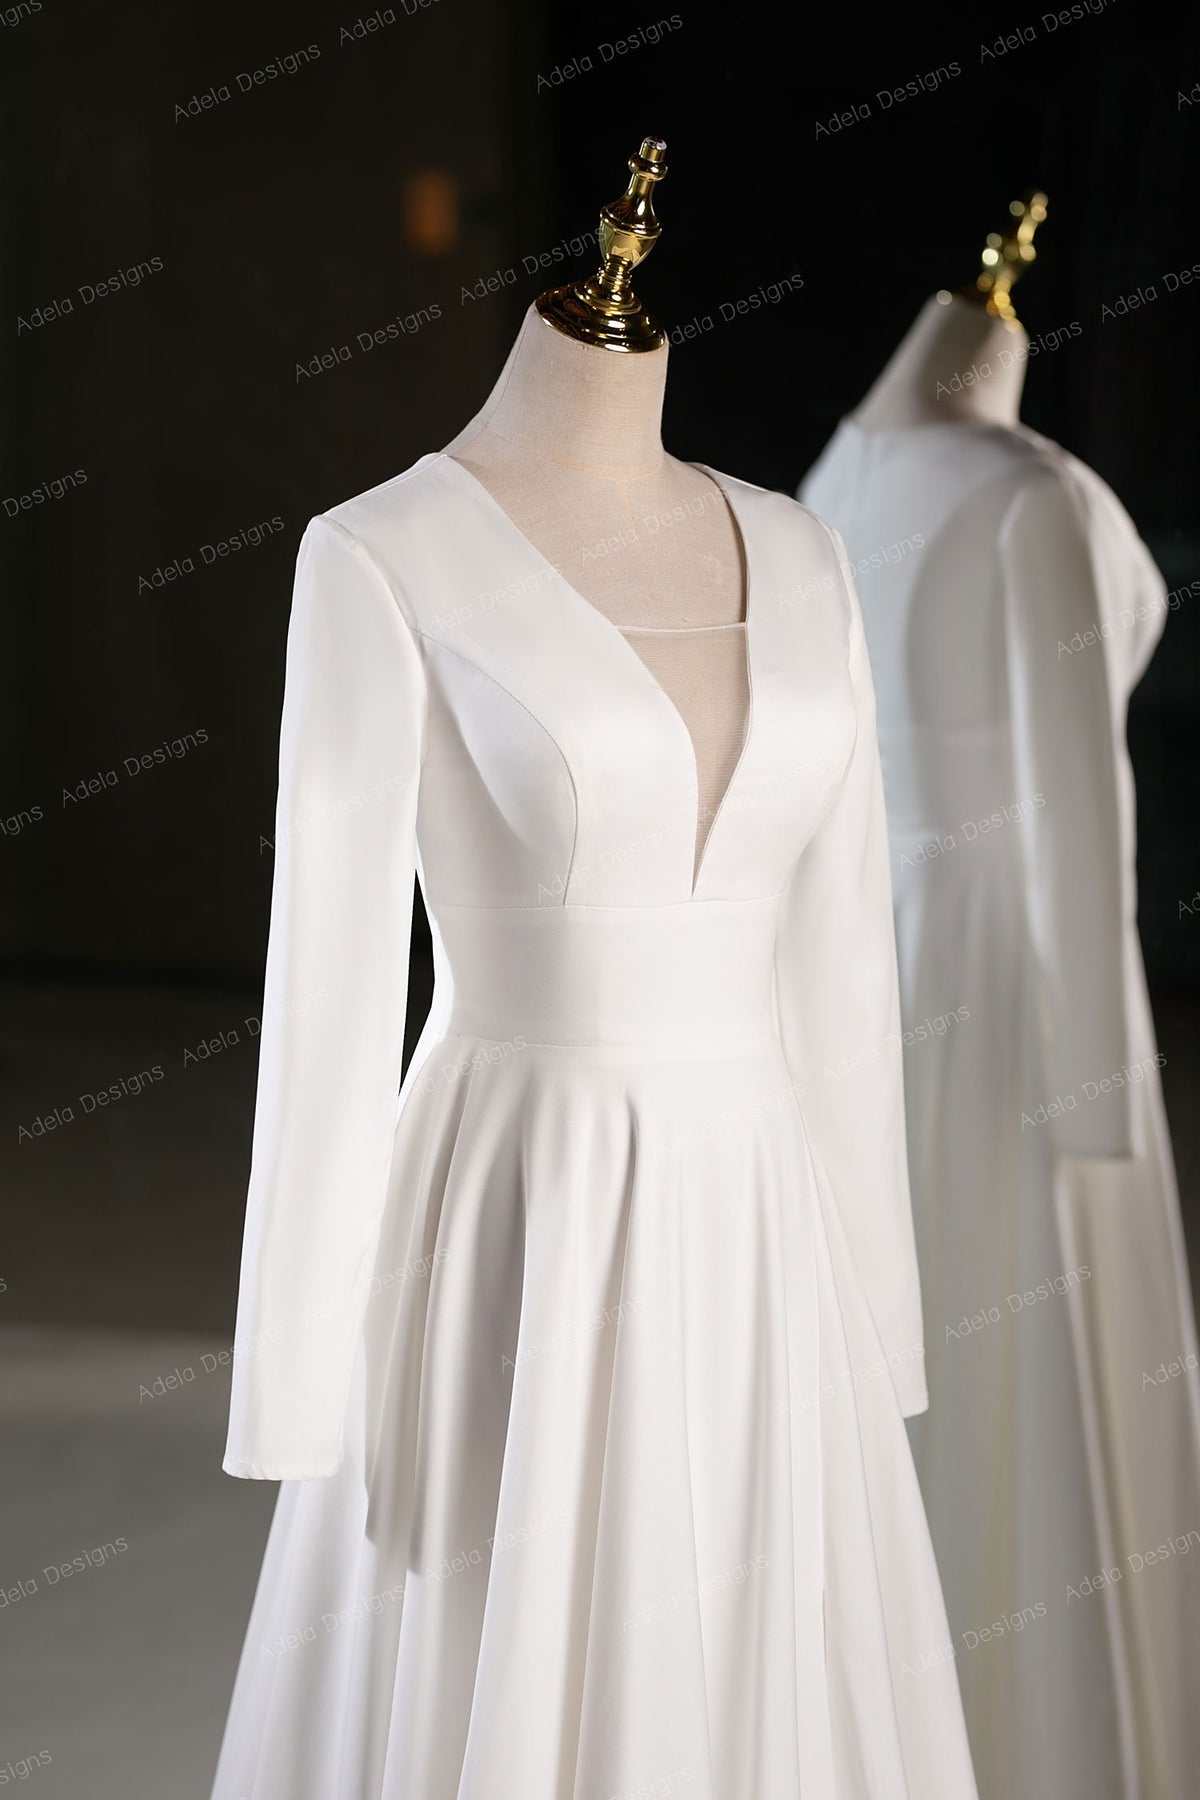 Modest Crepe Long Sleeve Bridal Gown Wedding Dress Minimalist Aline Silhouette Low V Neckline Covered Back Side Slit